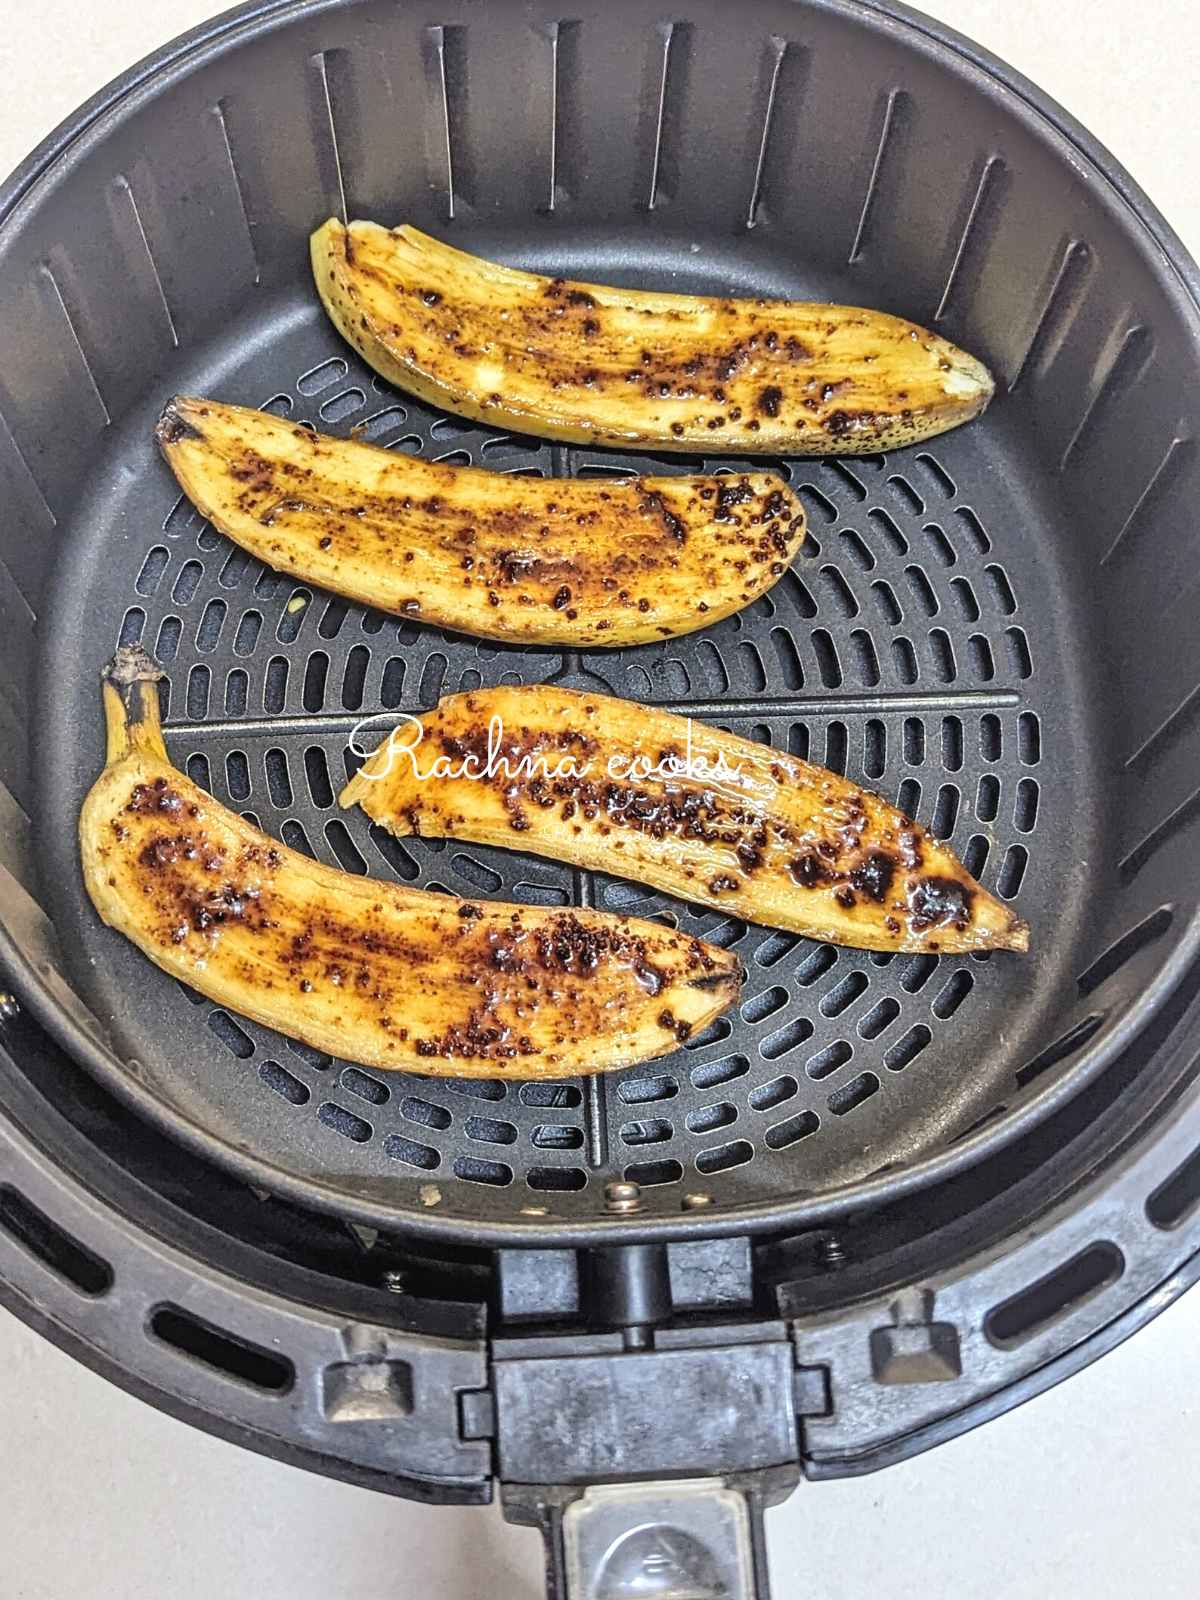 4 banana halves in air fryer basket